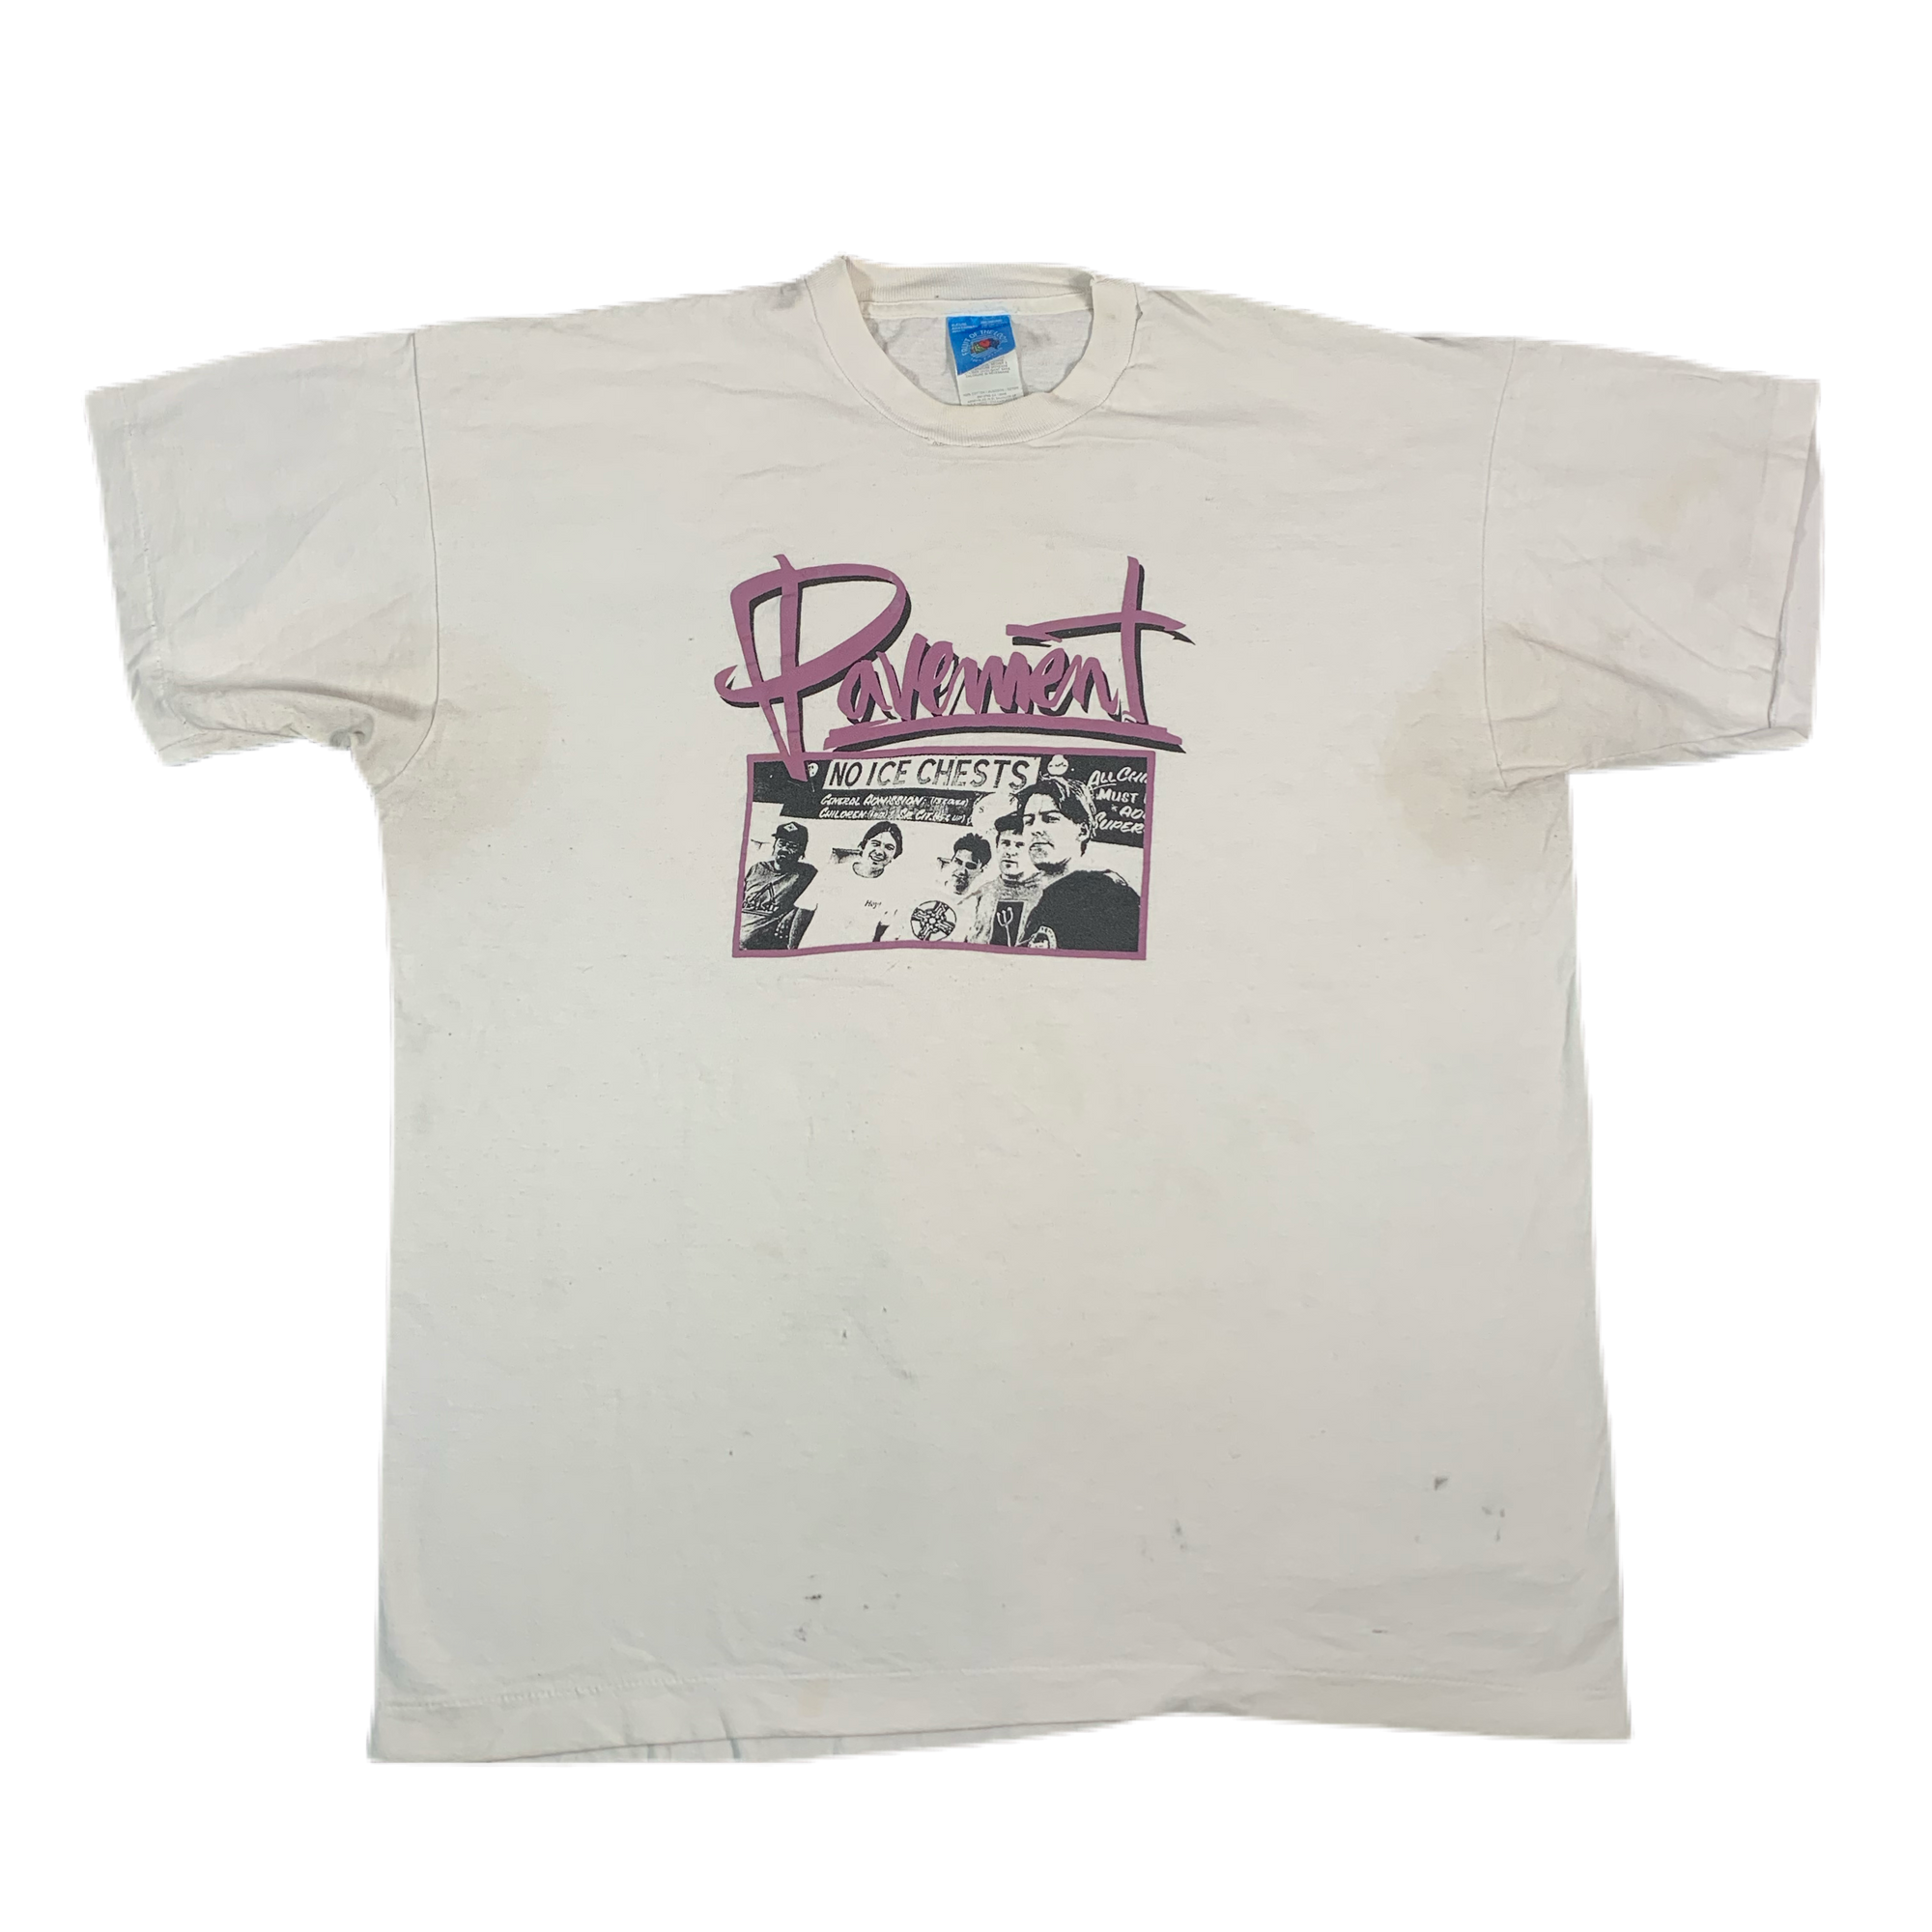 Vintage Pavement "Group Photo" T-Shirt - jointcustodydc